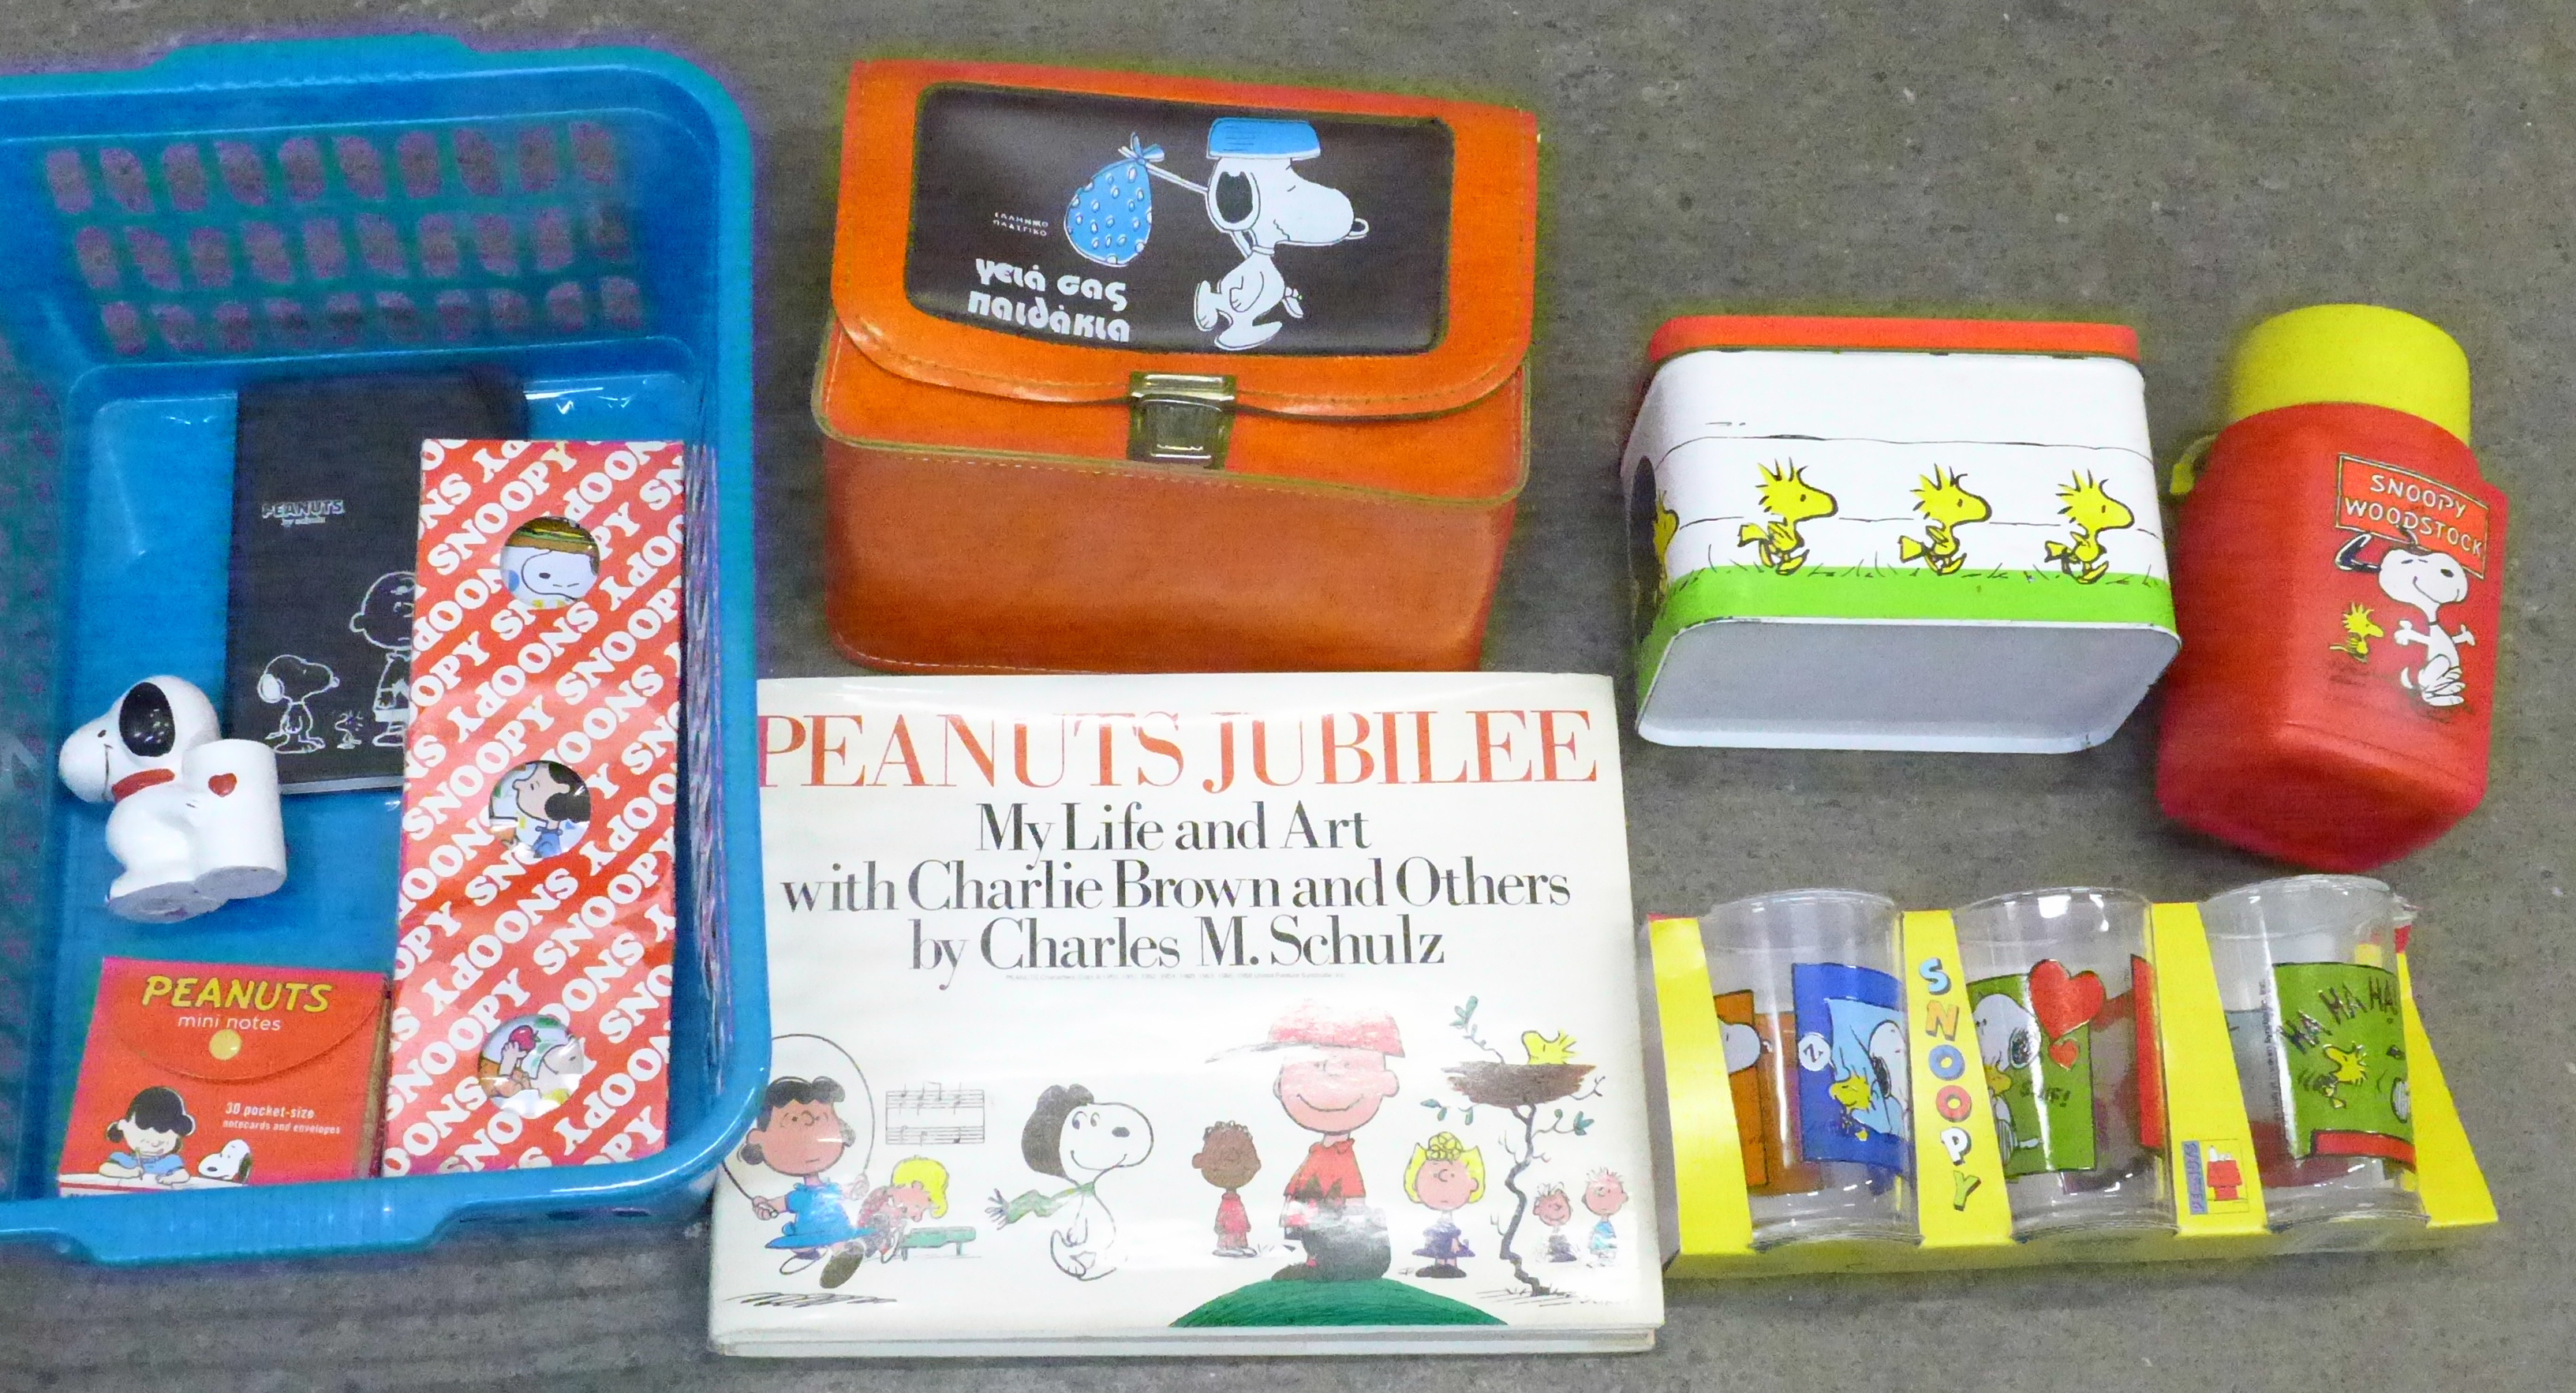 A collection of Charlie Brown and Peanuts memorabilia including handbag,